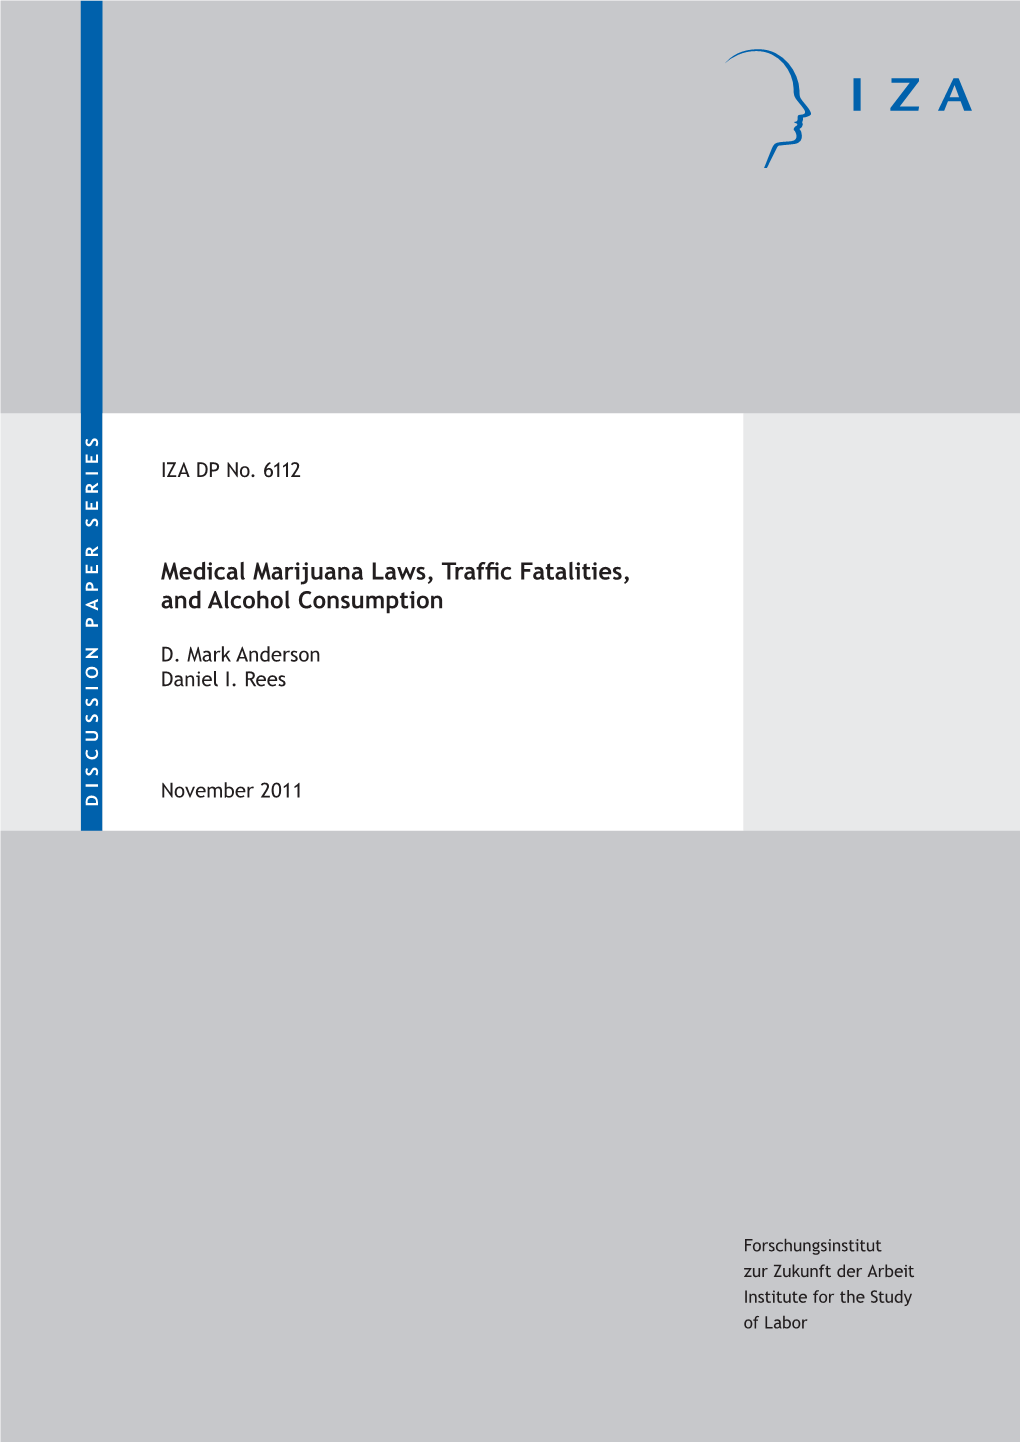 Medical Marijuana Laws, Traffic Fatalities, and Alcohol Consumption